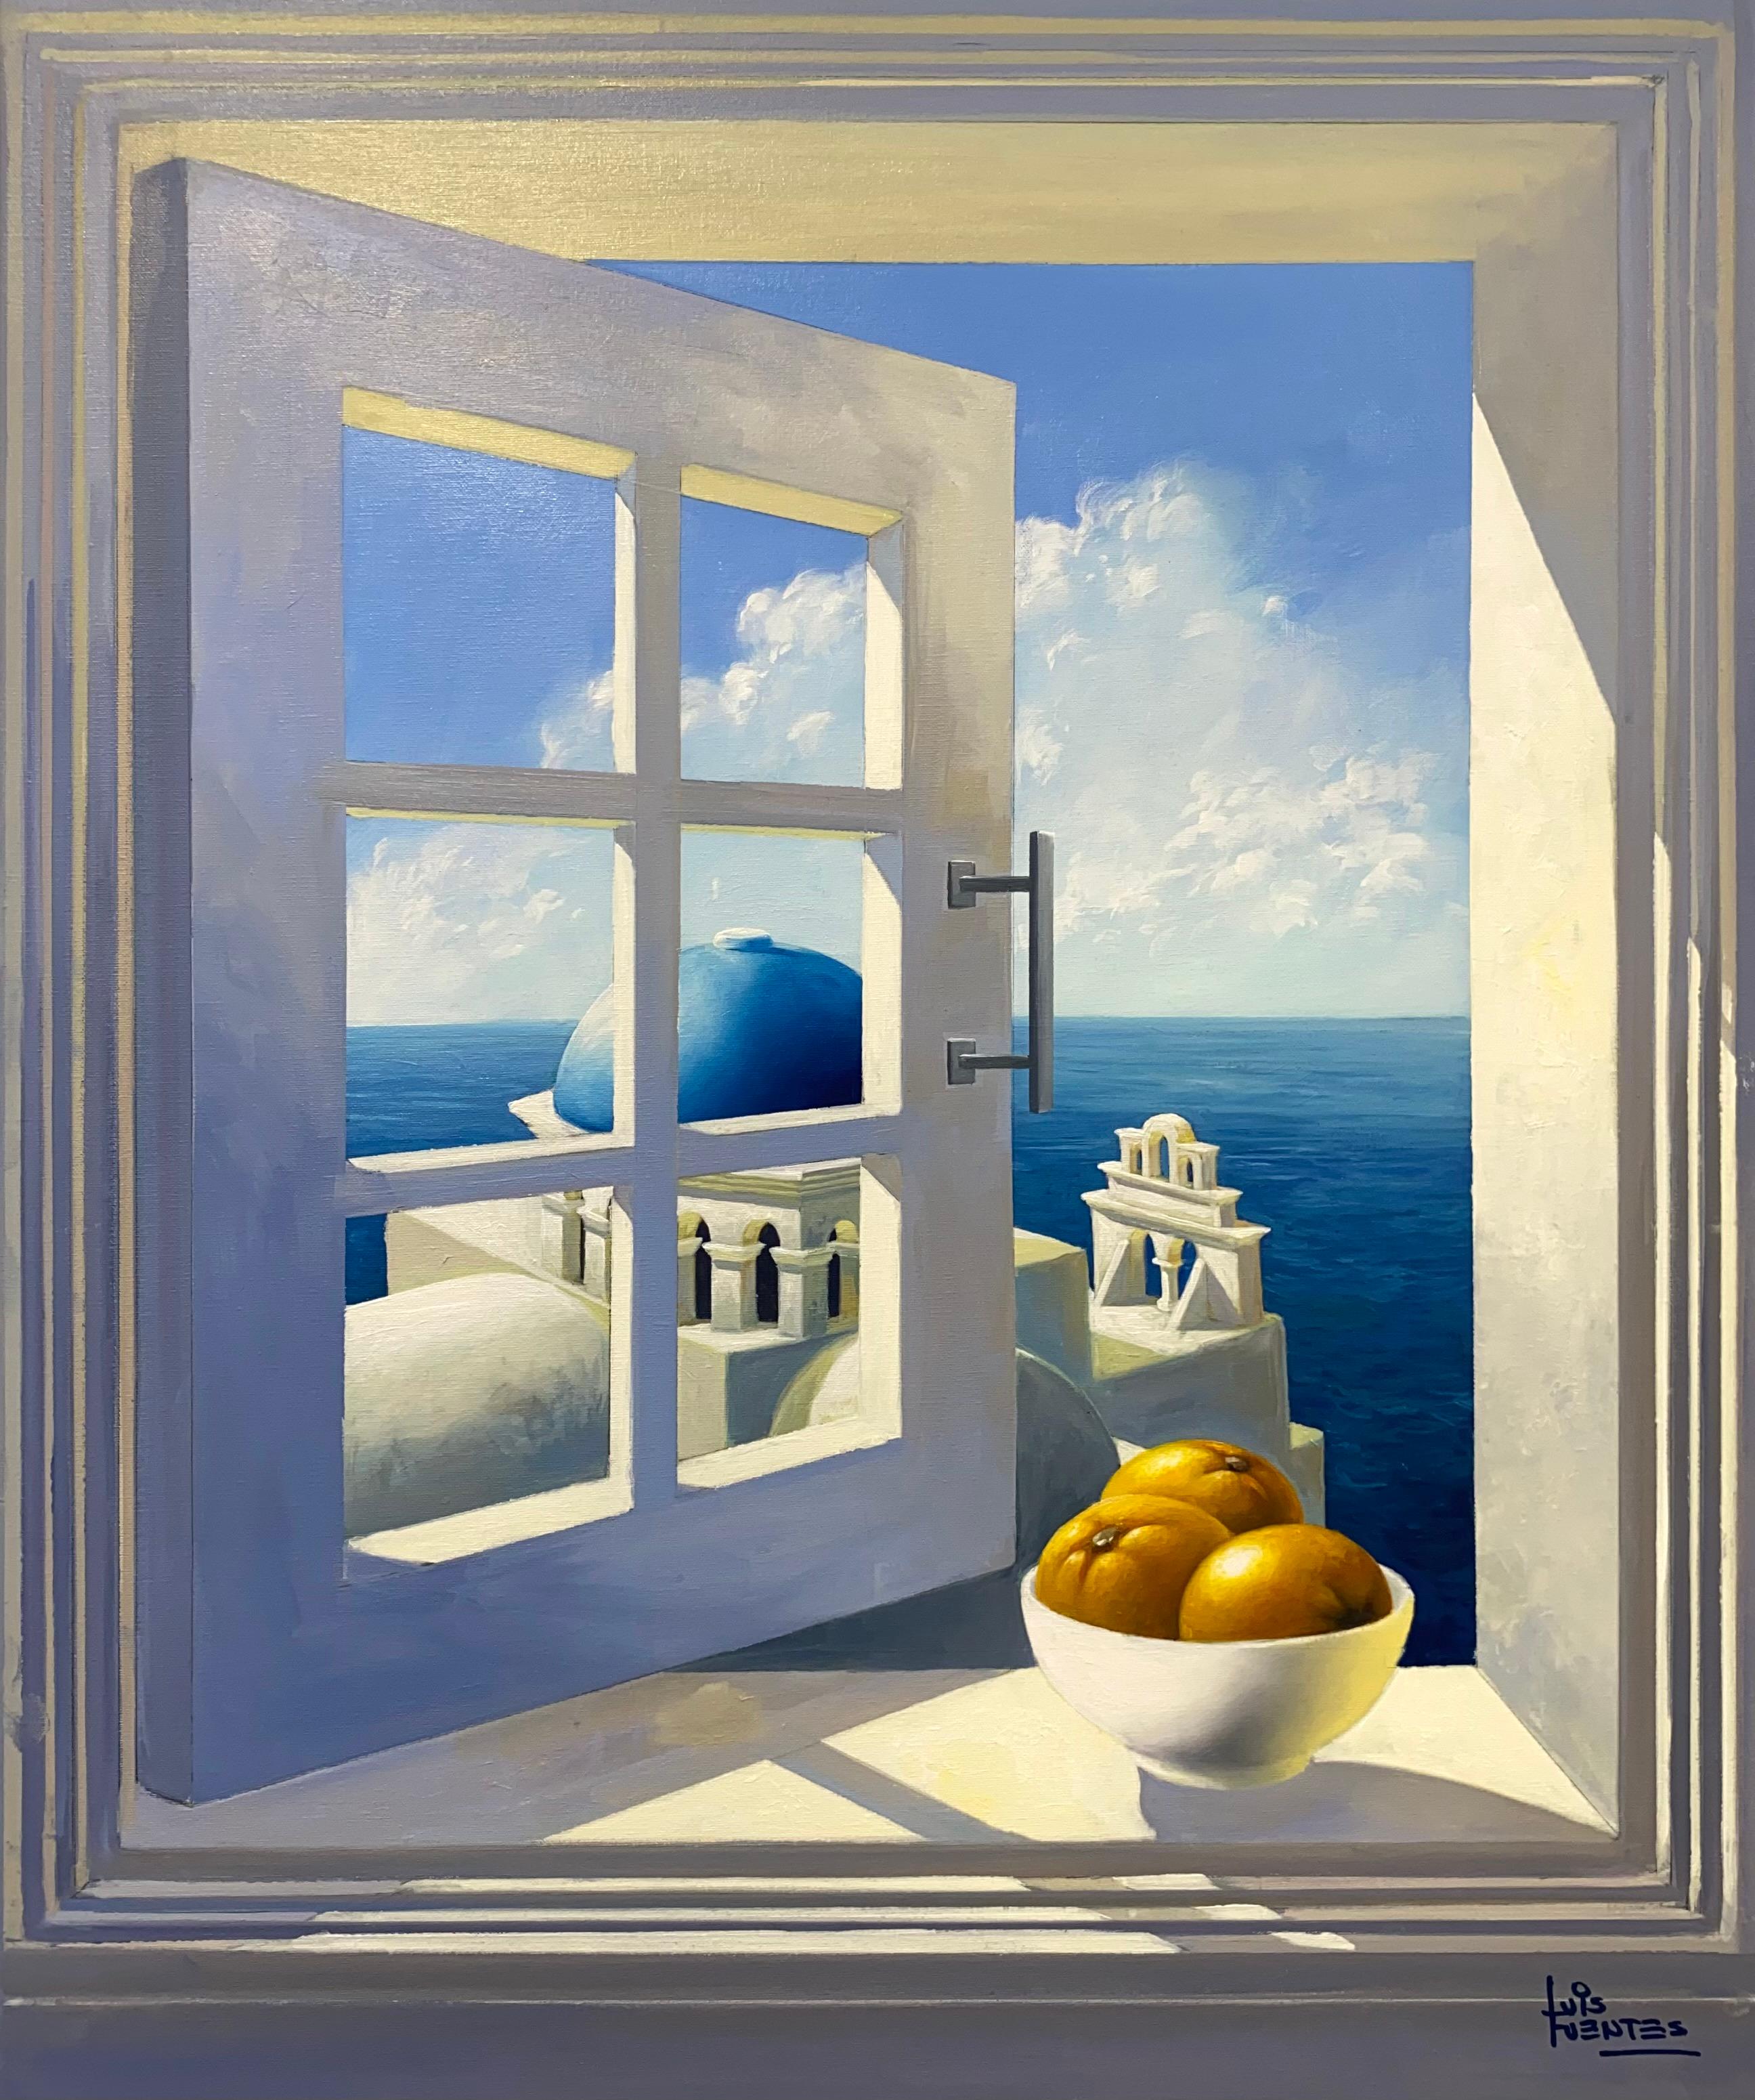 Luis Fuentes Figurative Painting - Sunlight - original seascape oil painting